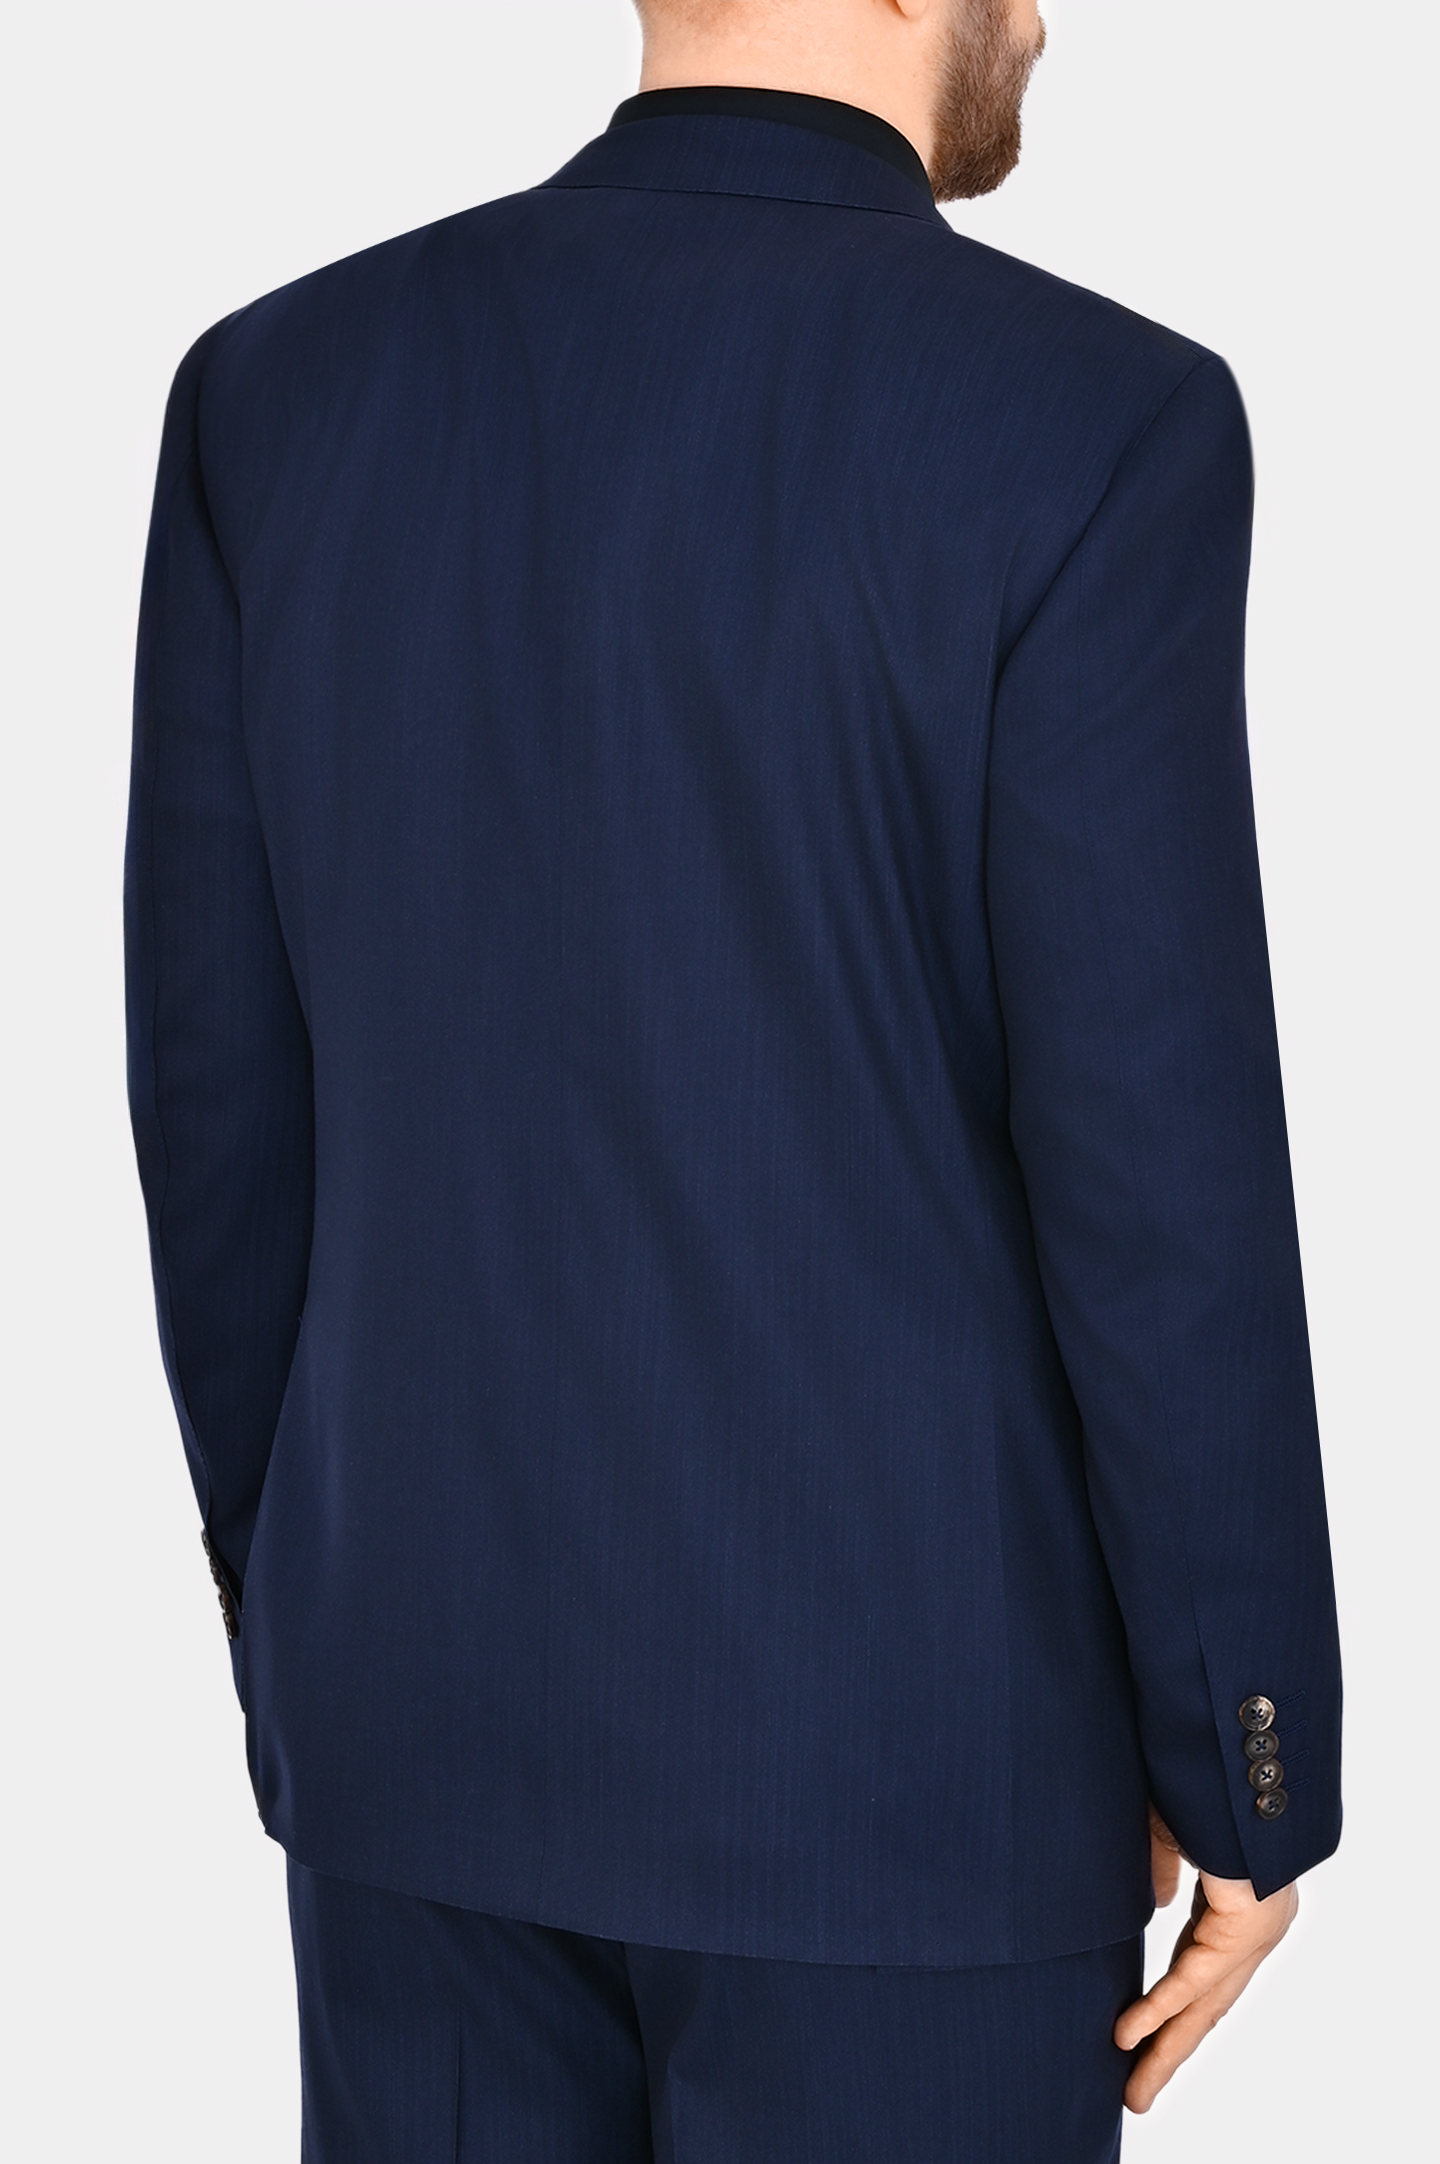 Костюм из смеси шерсти, шелка и эластана CANALI AX04335 E11280, цвет: Темно-синий, Мужской